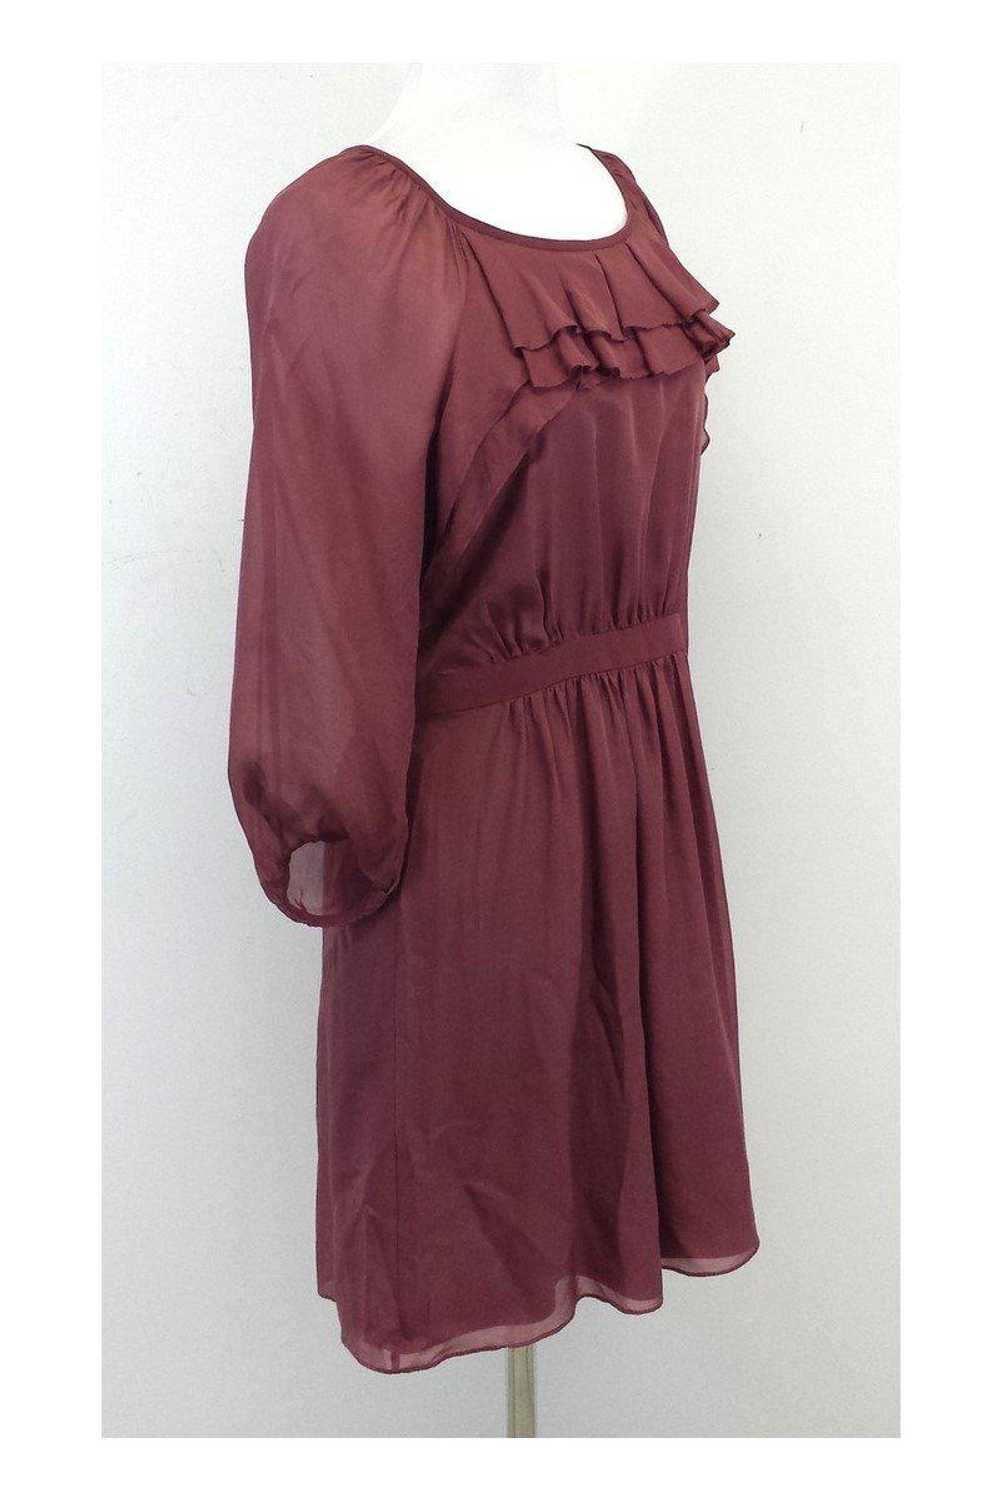 Tibi - Mauve Silk Ruffle Dress Sz 6 - image 2